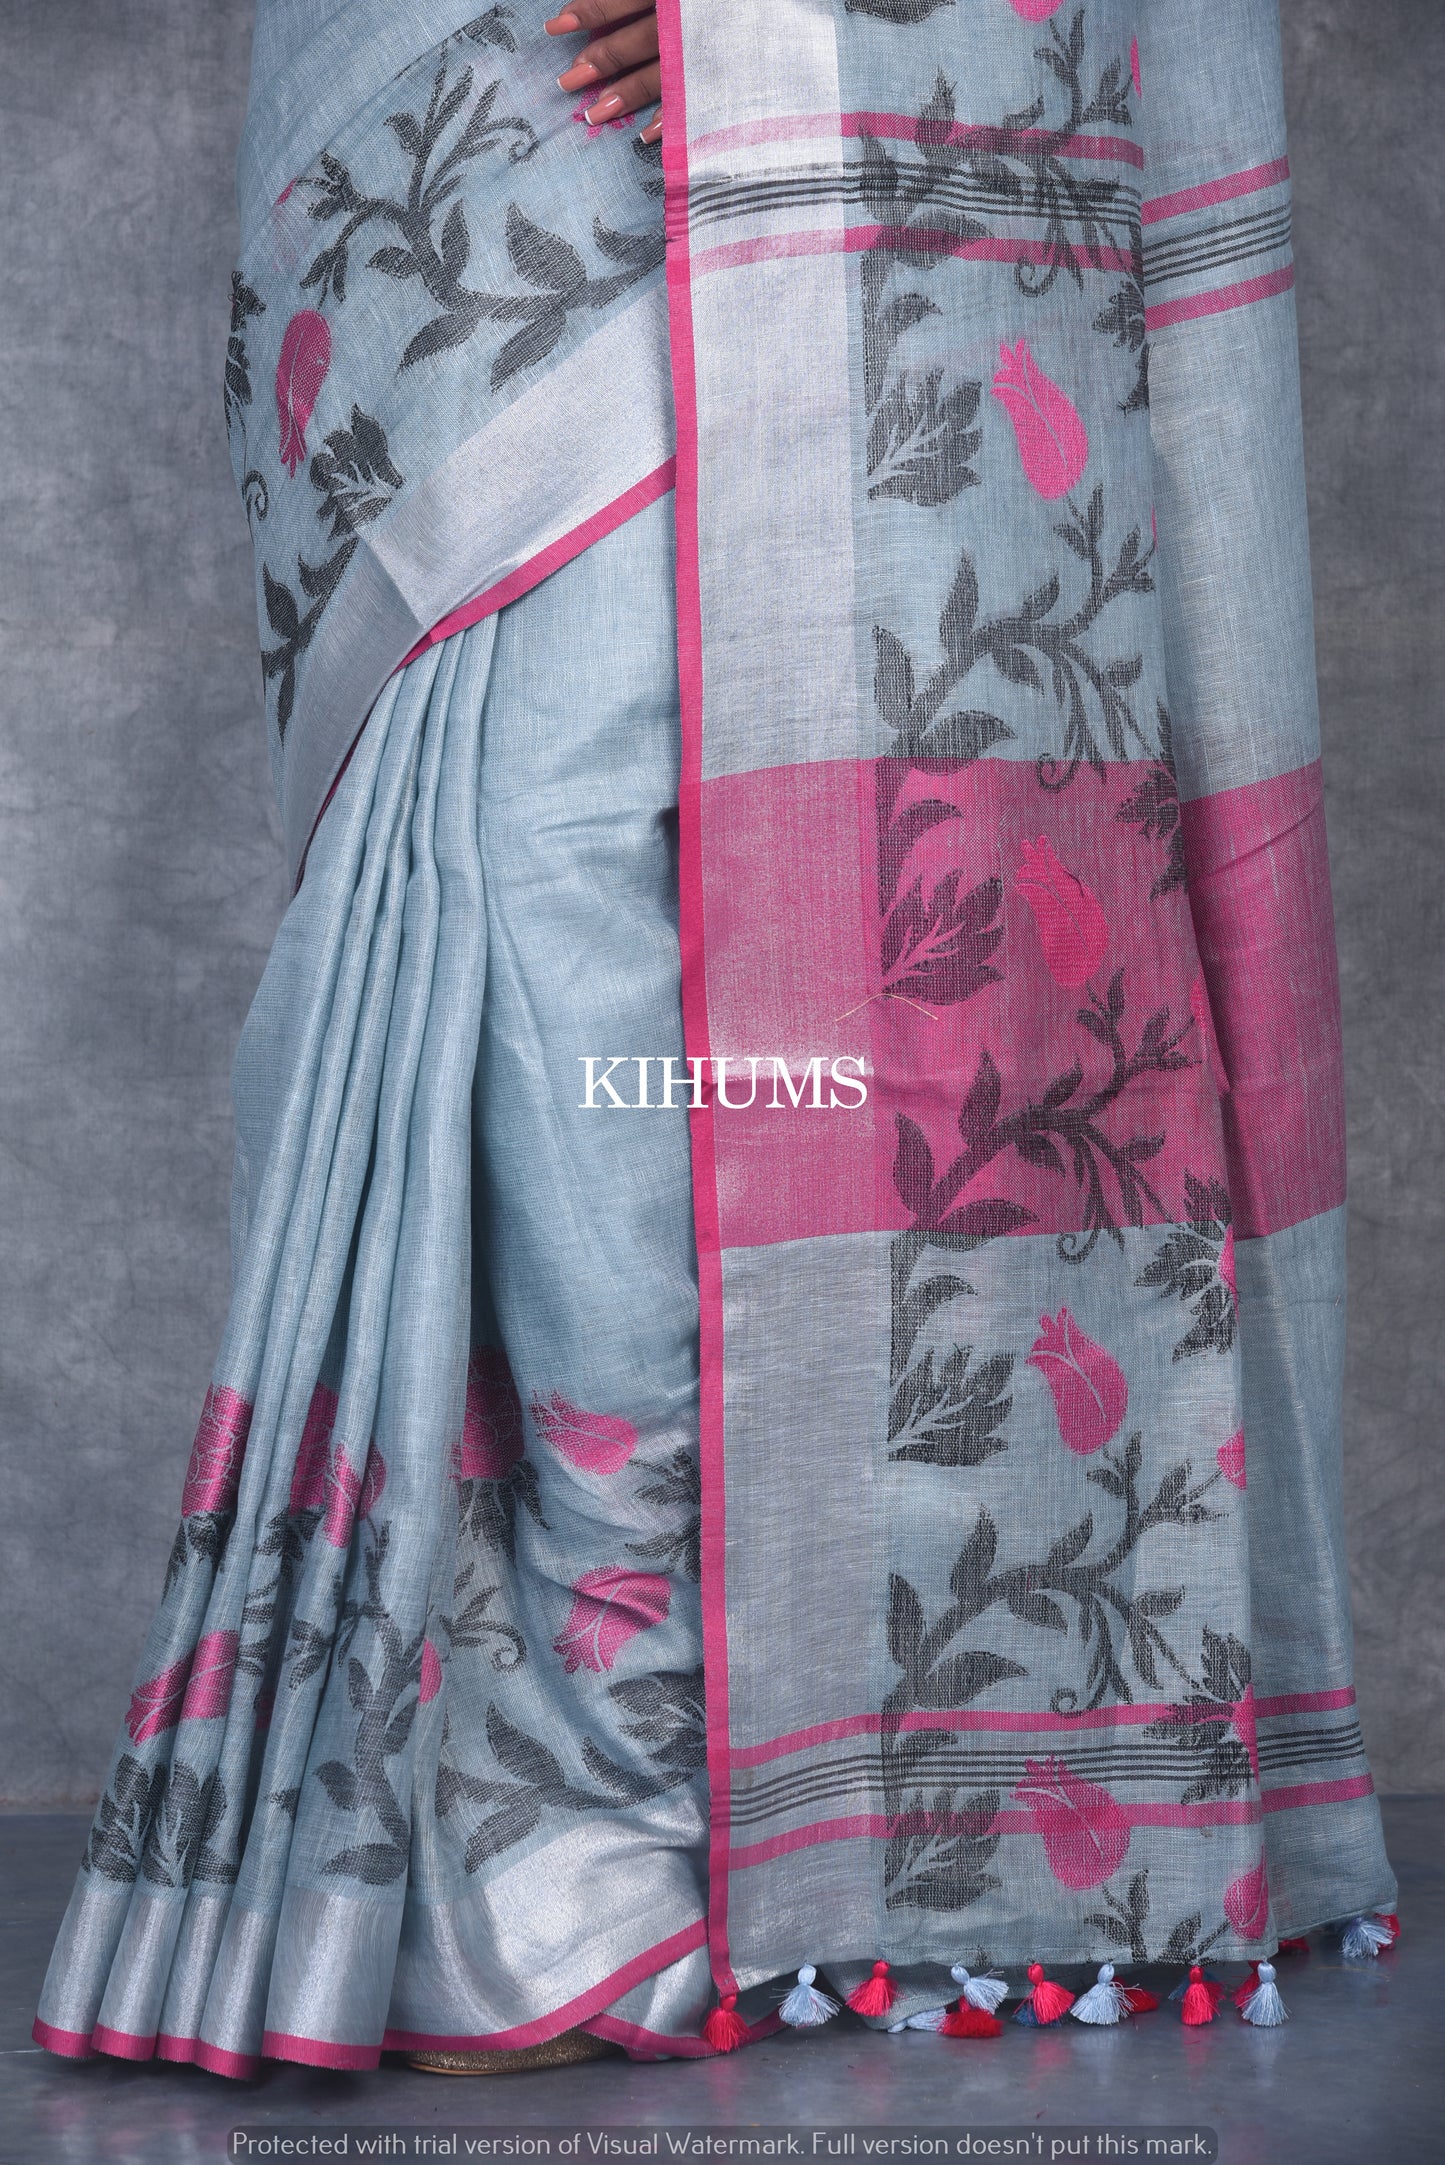 Cool Grey Shade Pure Linen Saree | Thread Woven Floral Design | Silver Zari borders | KIHUMS Saree